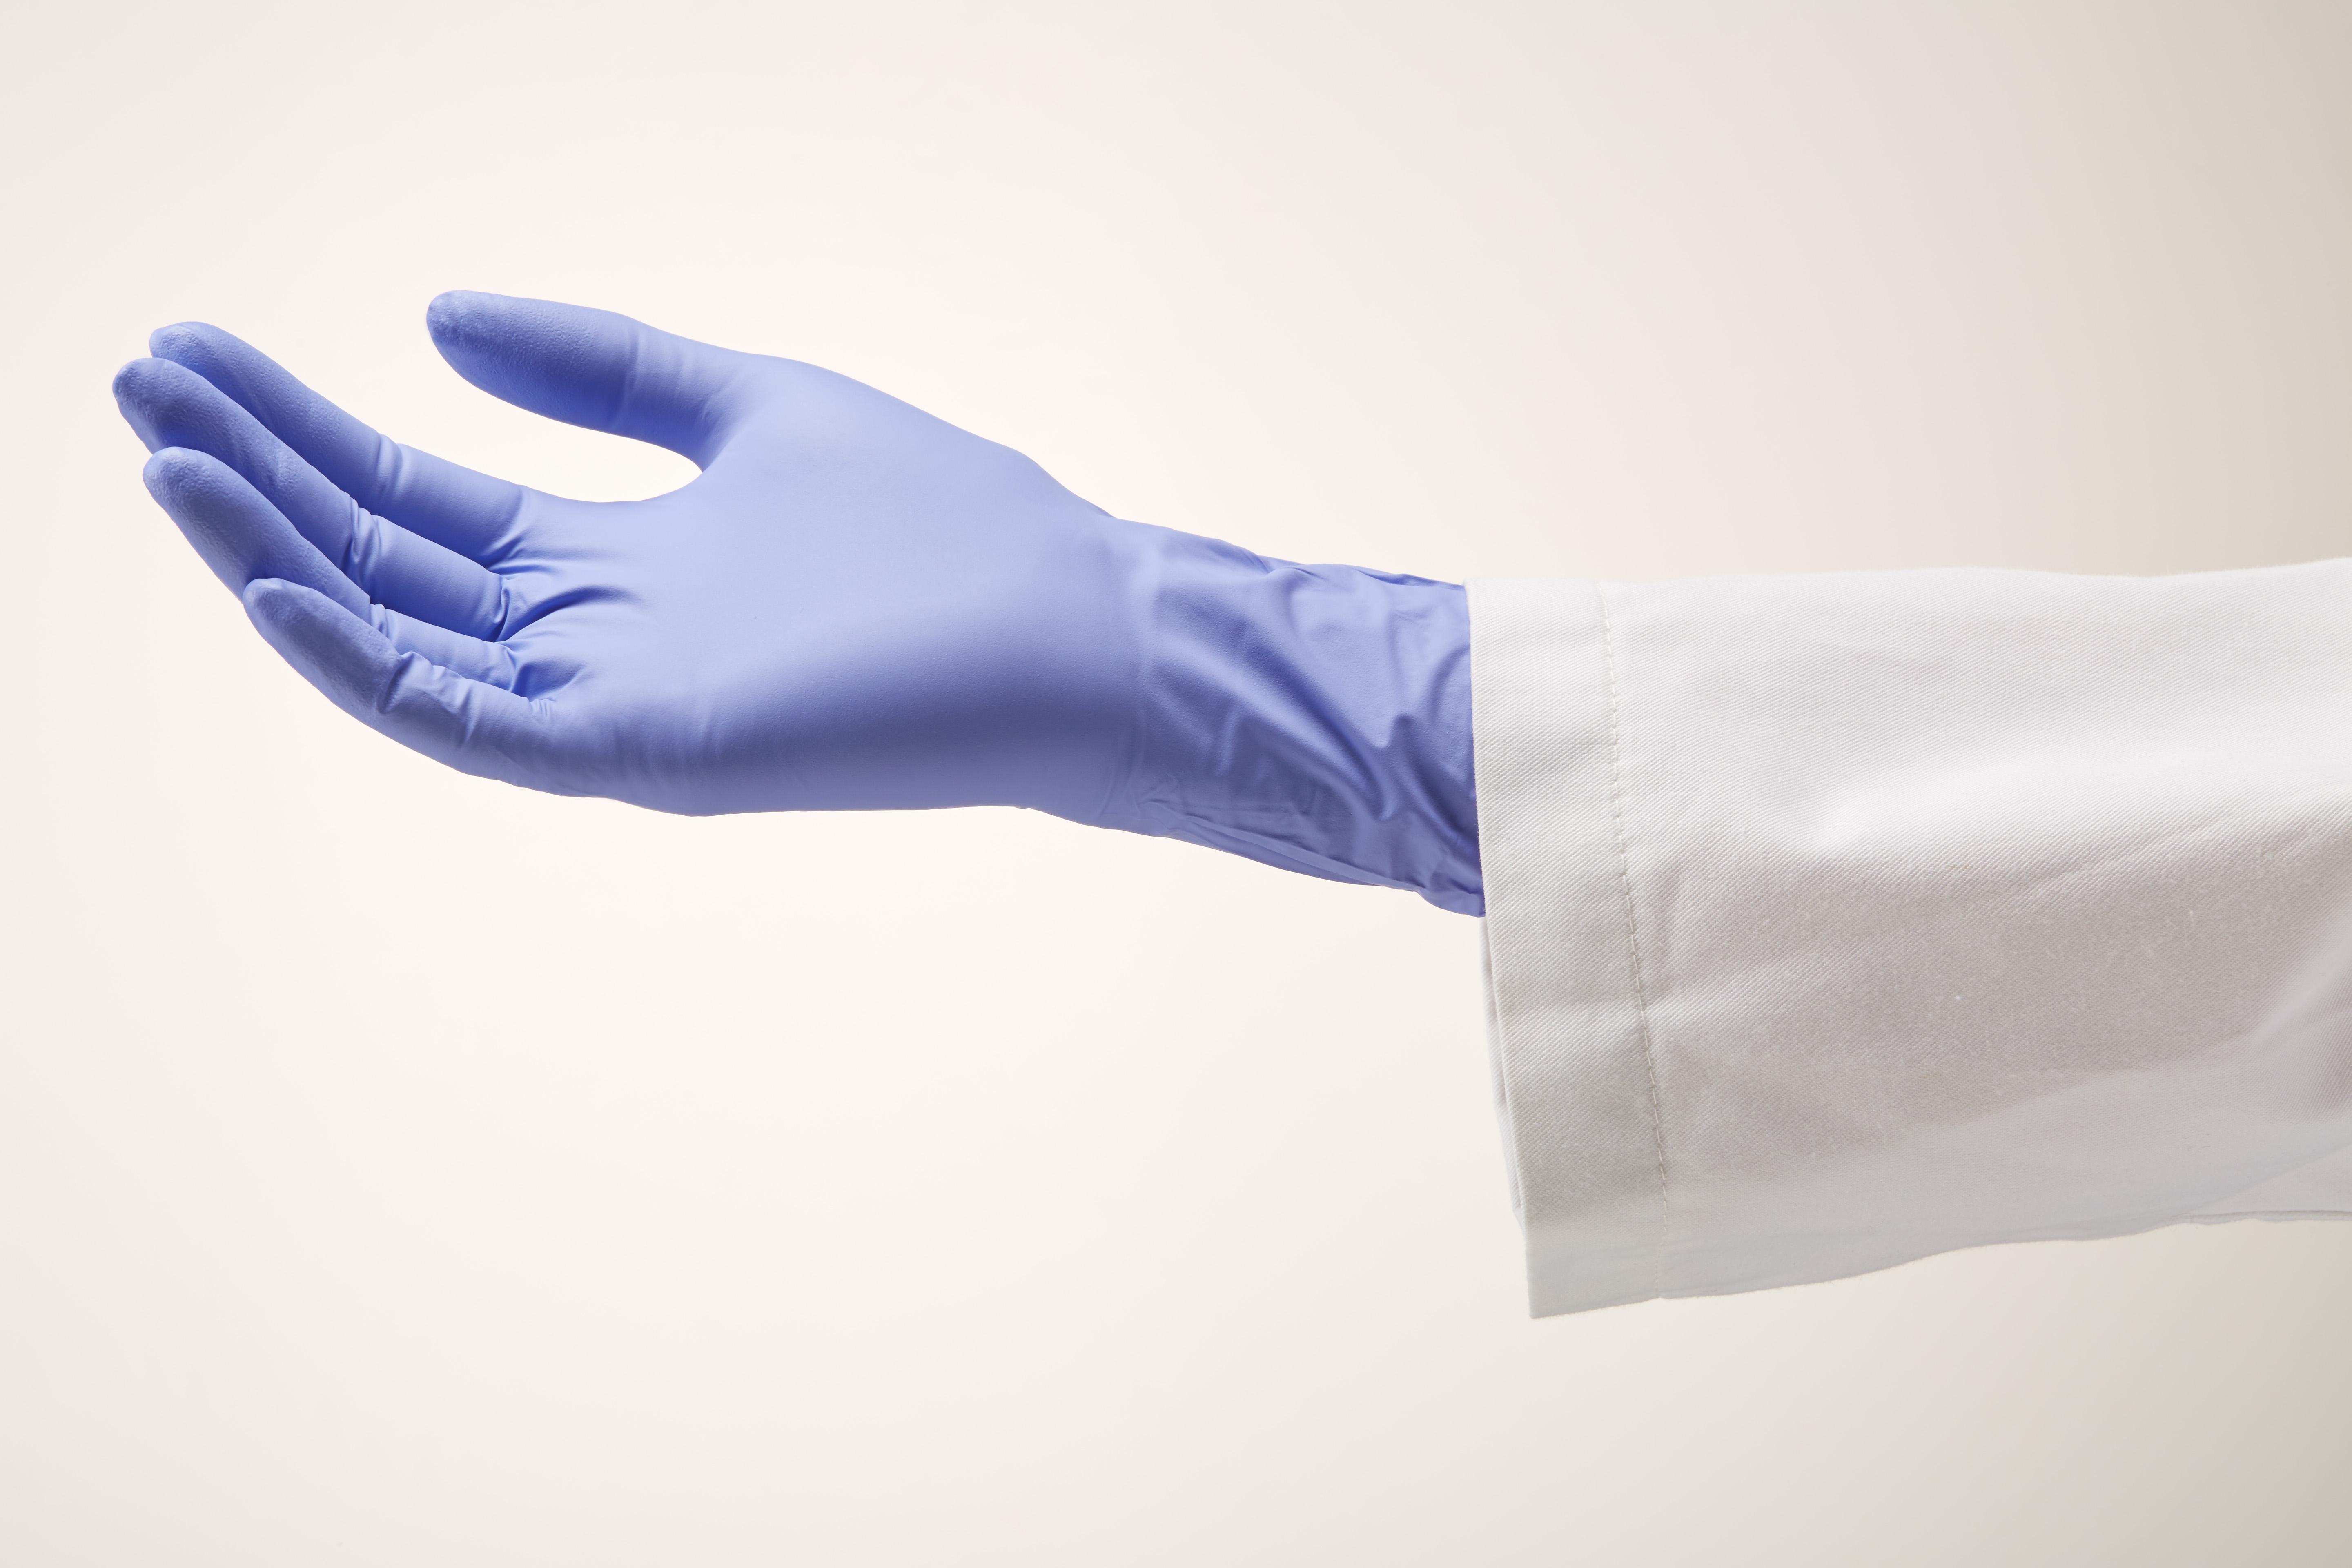 StarGuard PROTECT Nitrile Gloves, Powder Free, Violet-Blue, Size L, Pk/ 10 x 100 gloves.